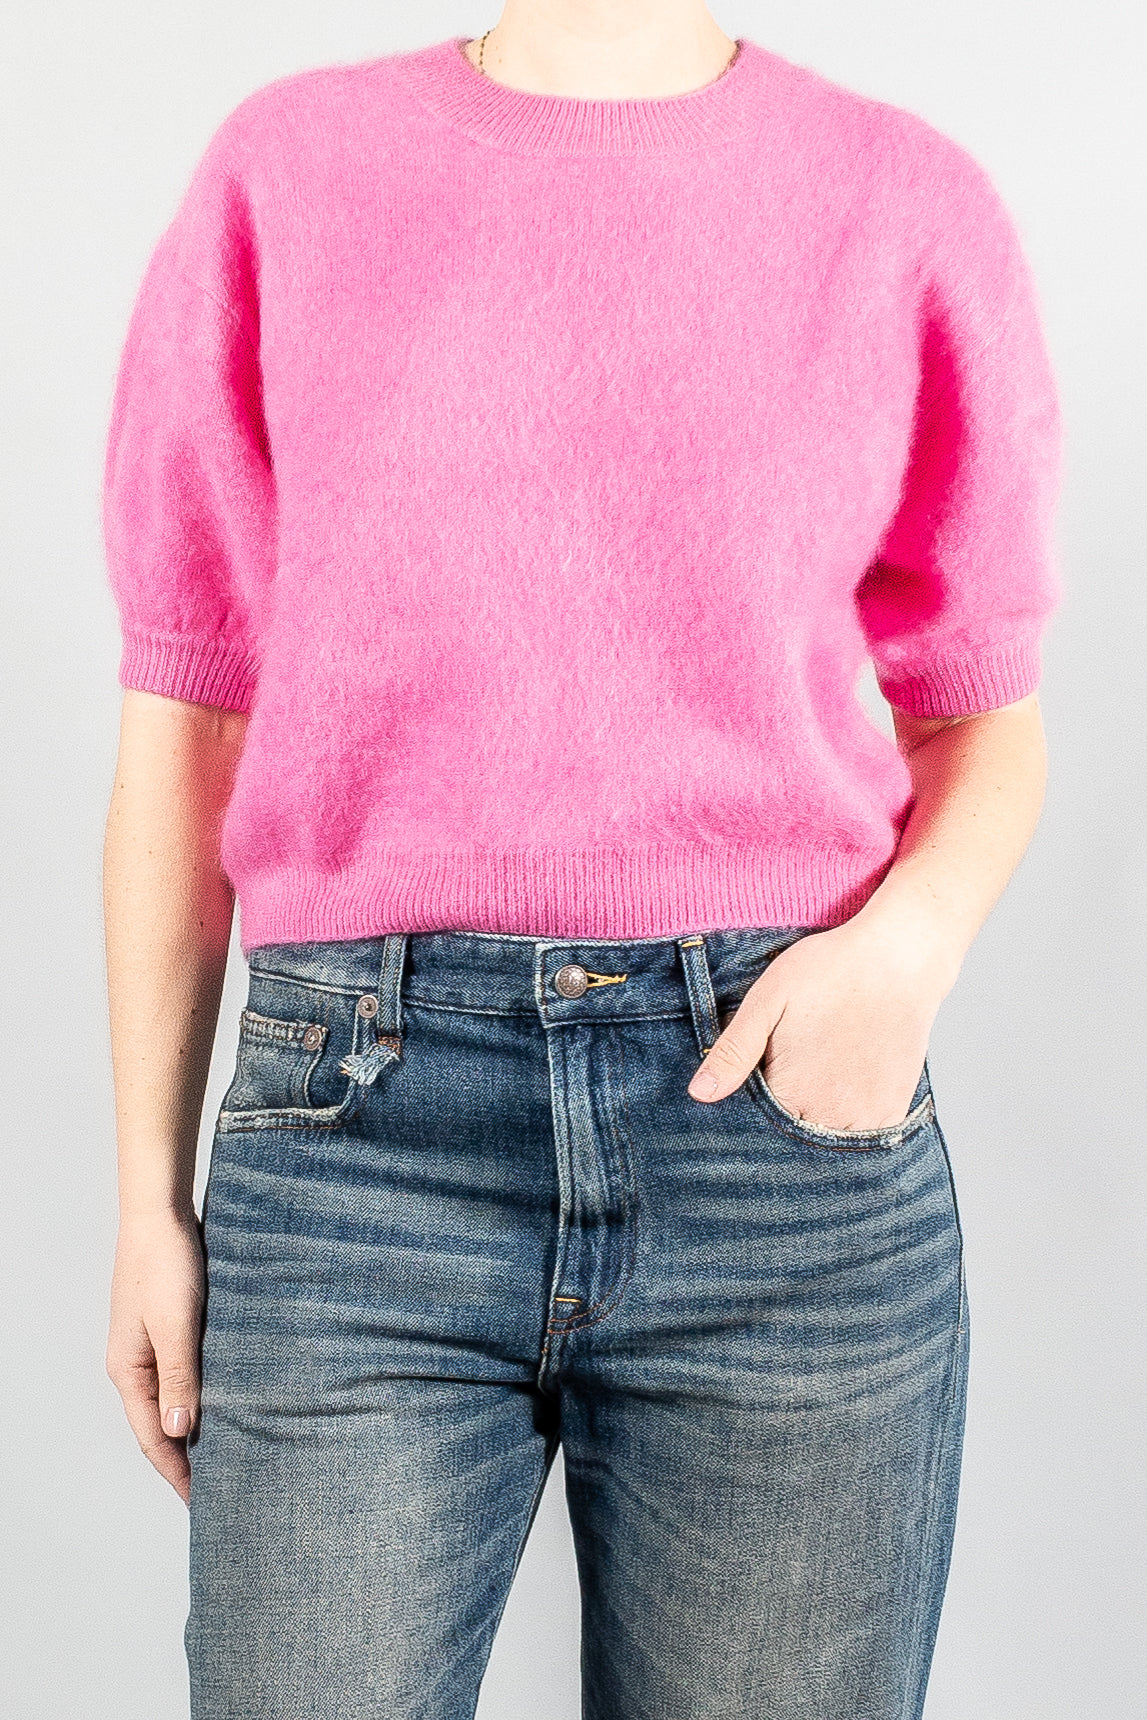 Lisa Yang Juniper Sweater